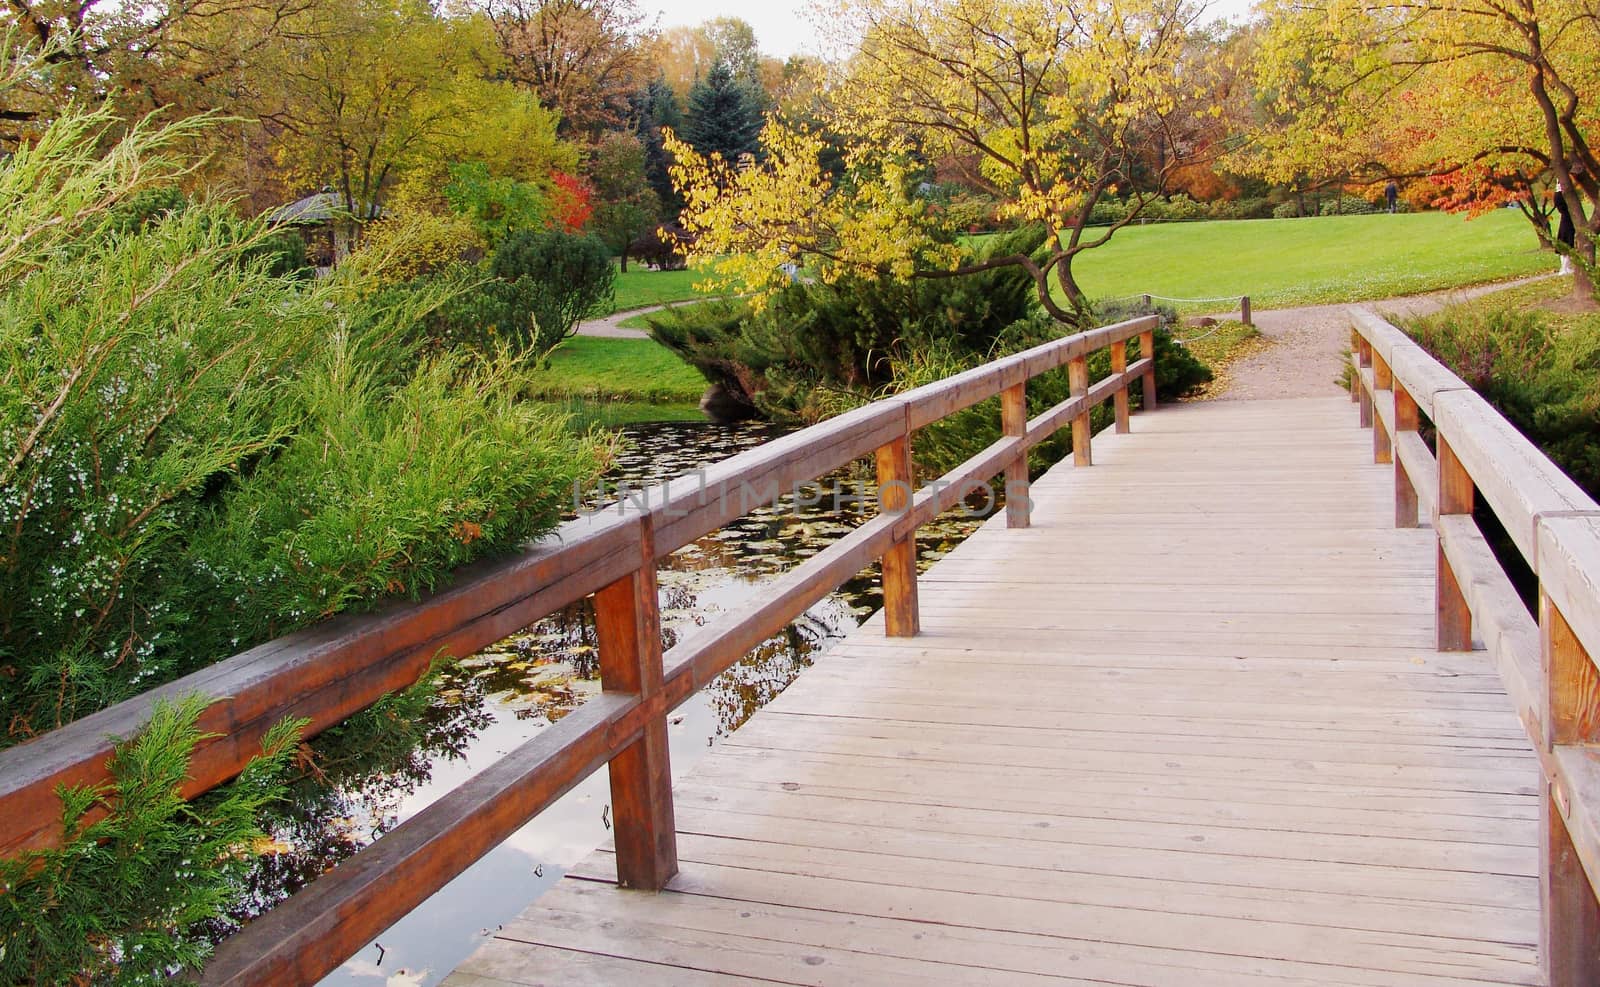 Wooden Bridge at Japanese Garden in Fall by elena_vz